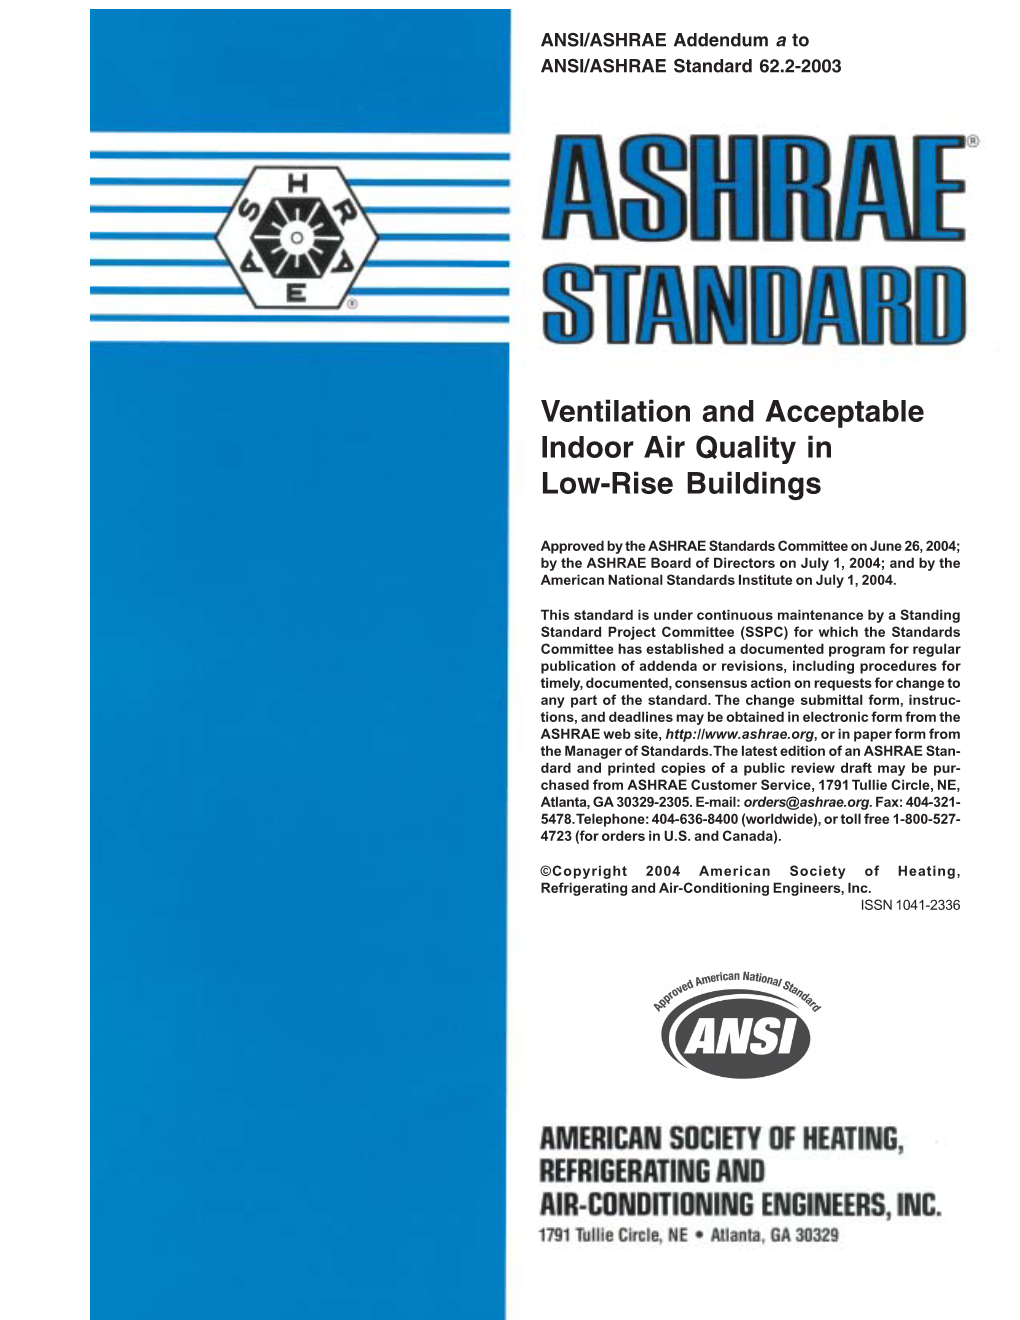 ANSI/ASHRAE Addendum a to ANSI/ASHRAE Standard 62.2-2003